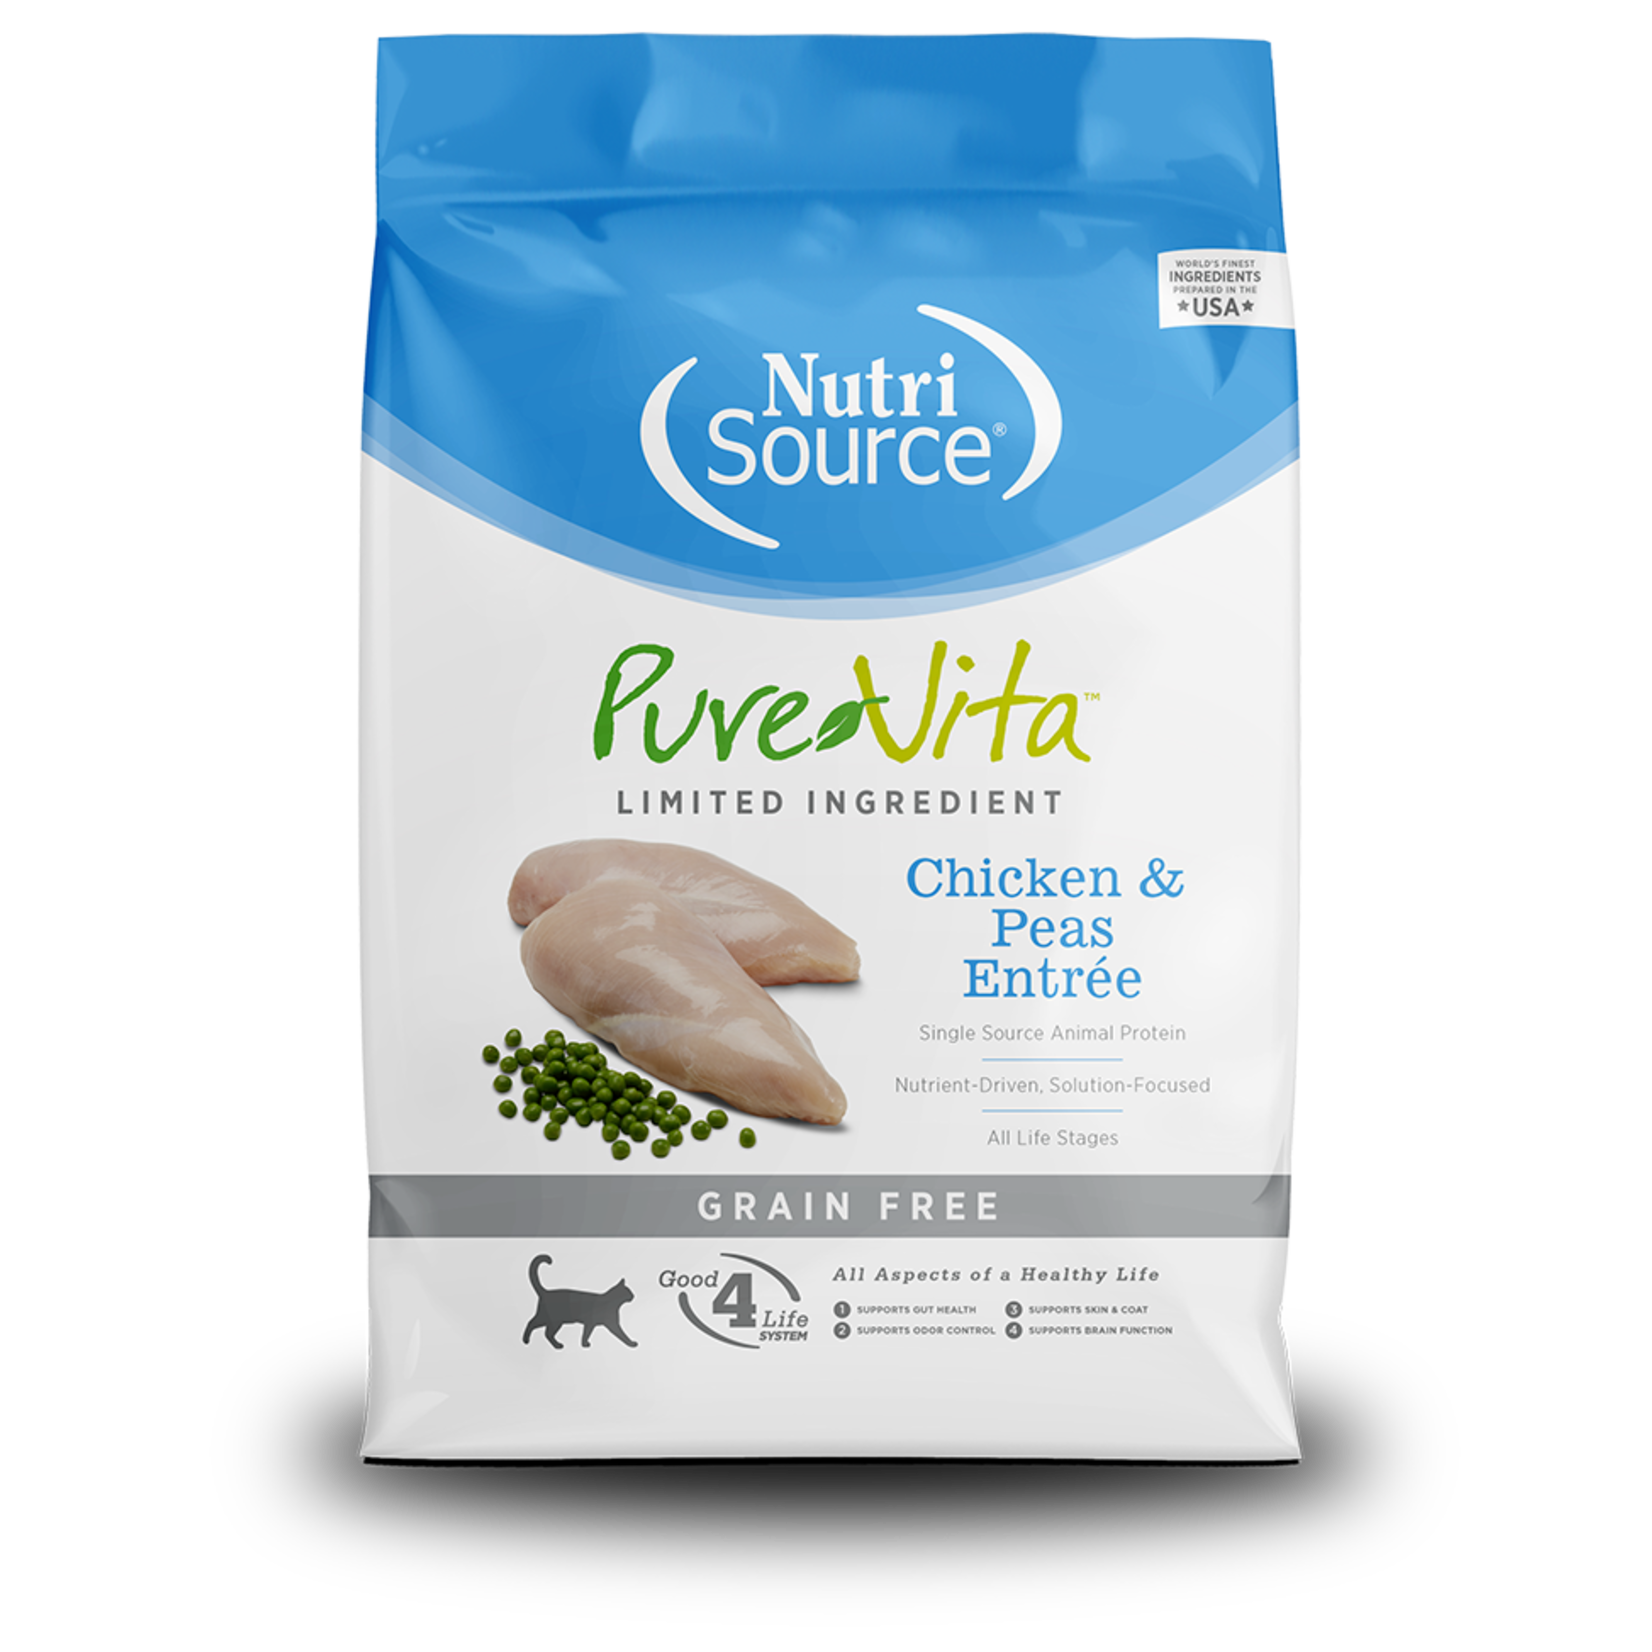 NutriSource Nutrisource Pure Vita Dry Cat Food Chicken & Peas Entree Limited Ingredient Grain Free